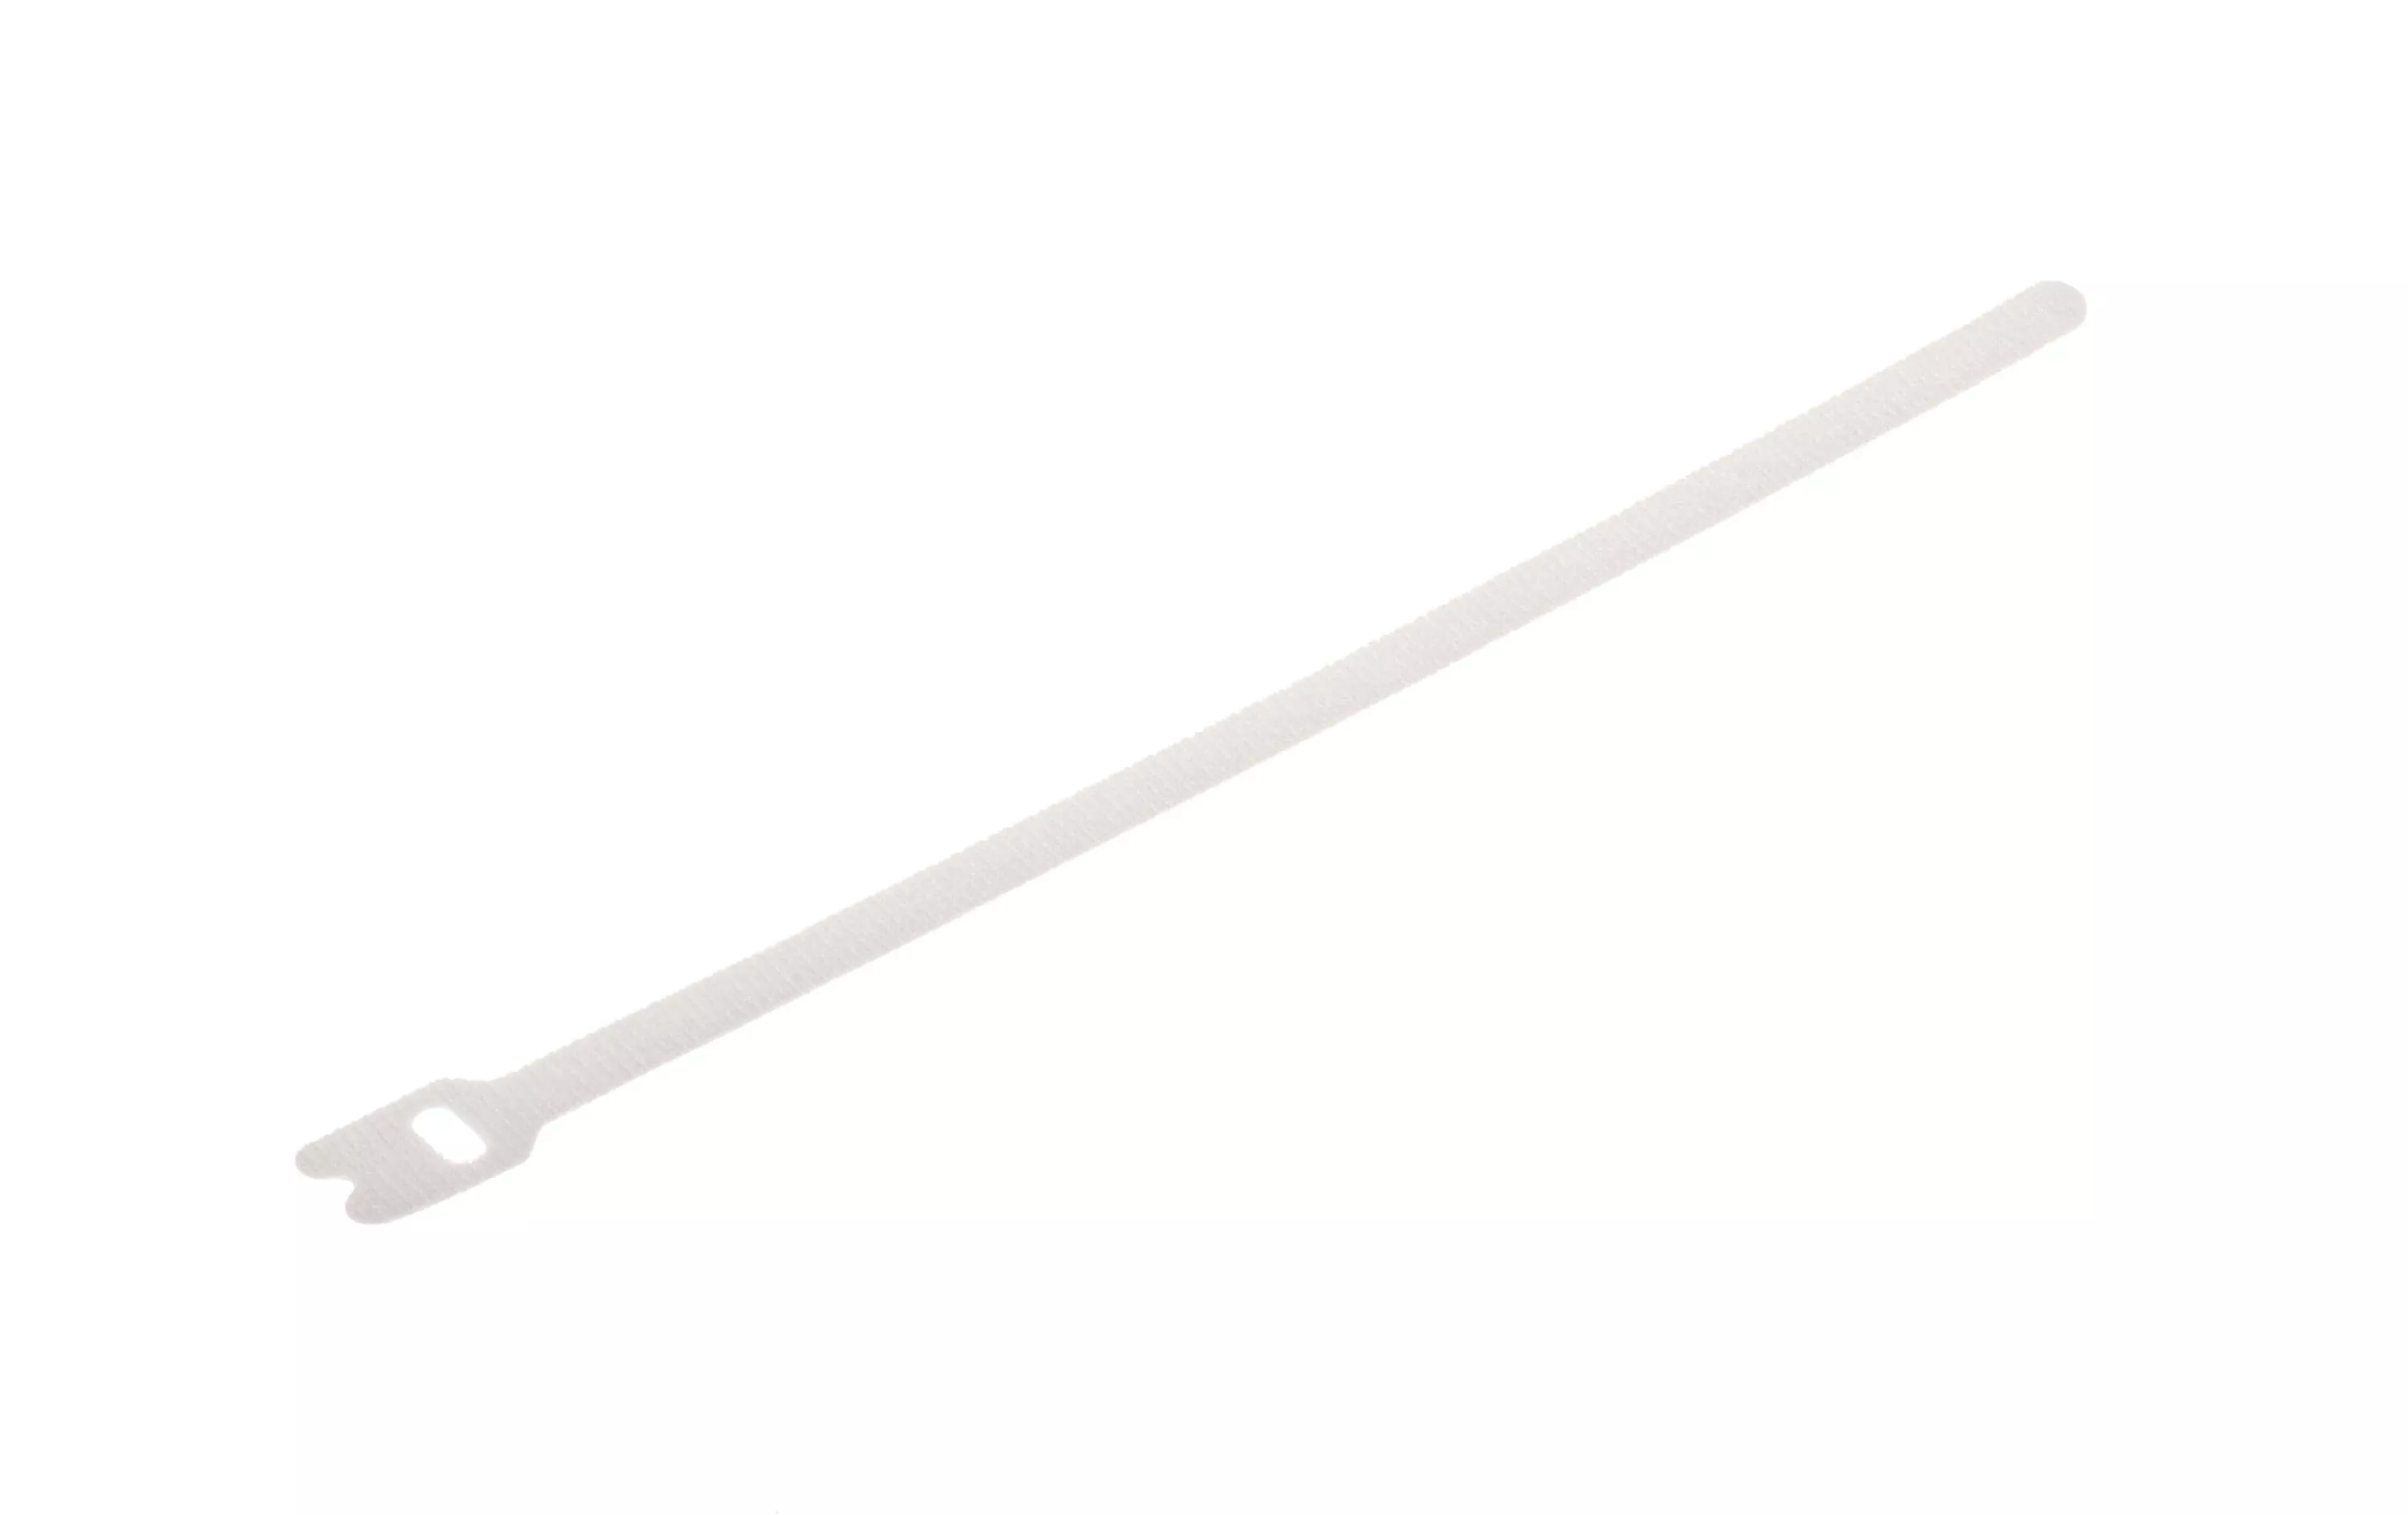 Klettkabelbinder E7-2 Strap 7 x 200 mm Weiss, 10 Stück